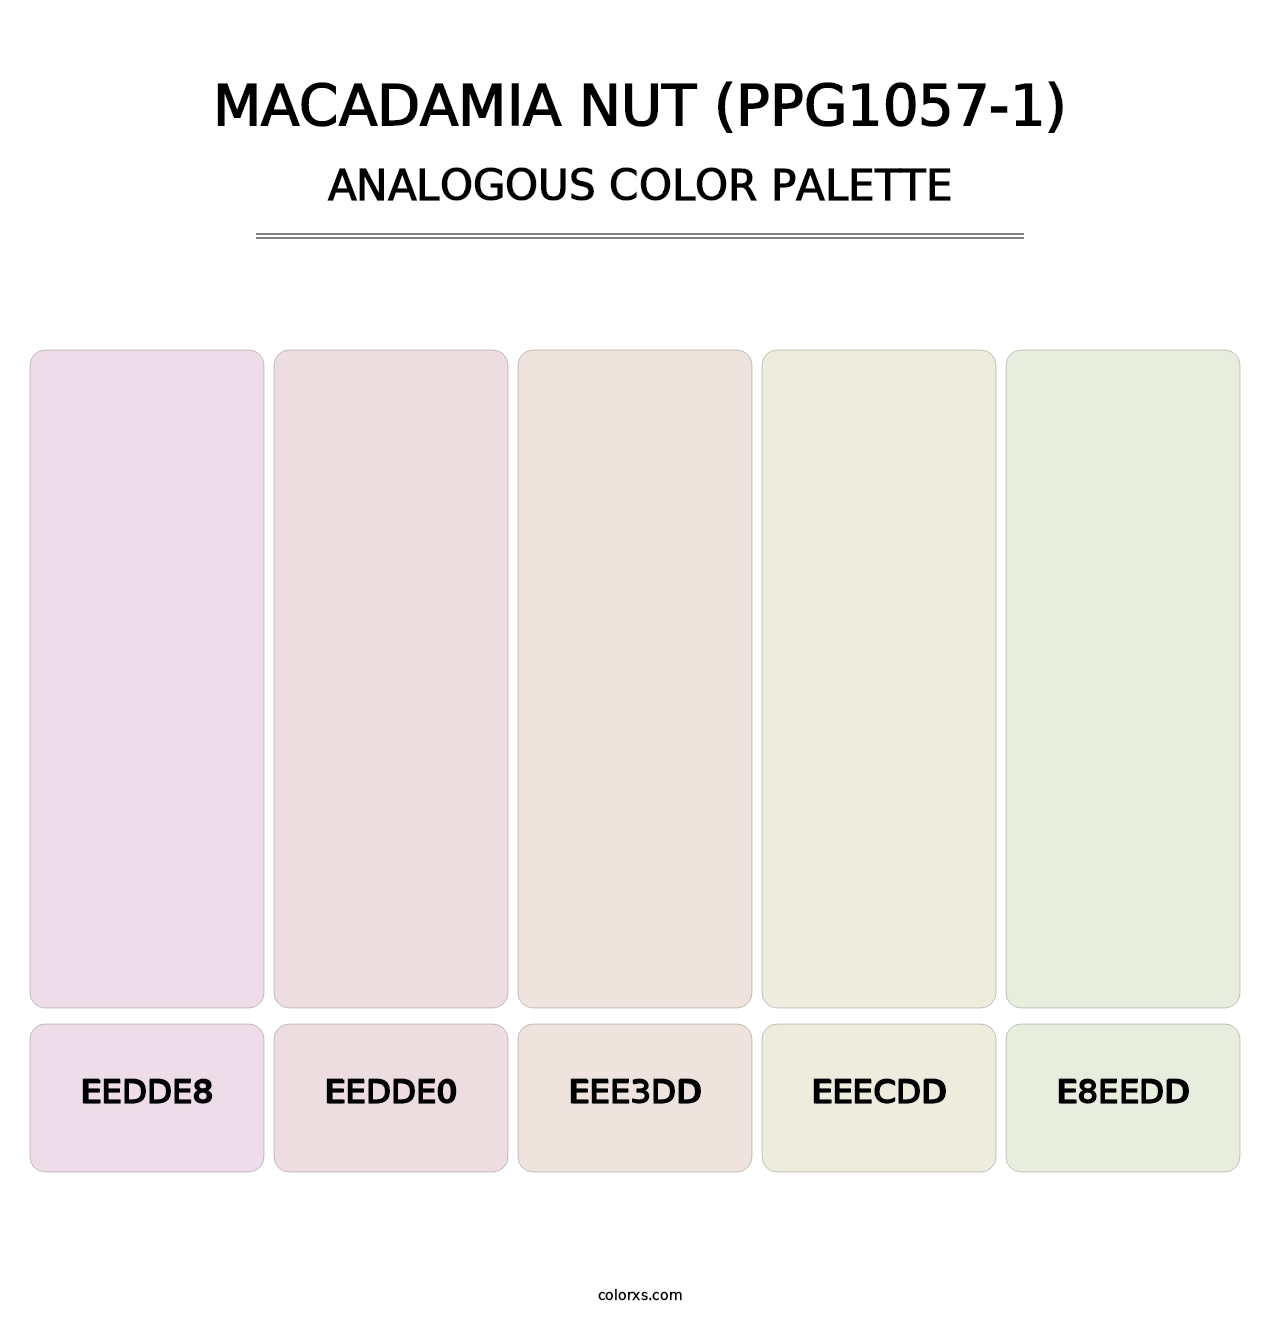 Macadamia Nut (PPG1057-1) - Analogous Color Palette